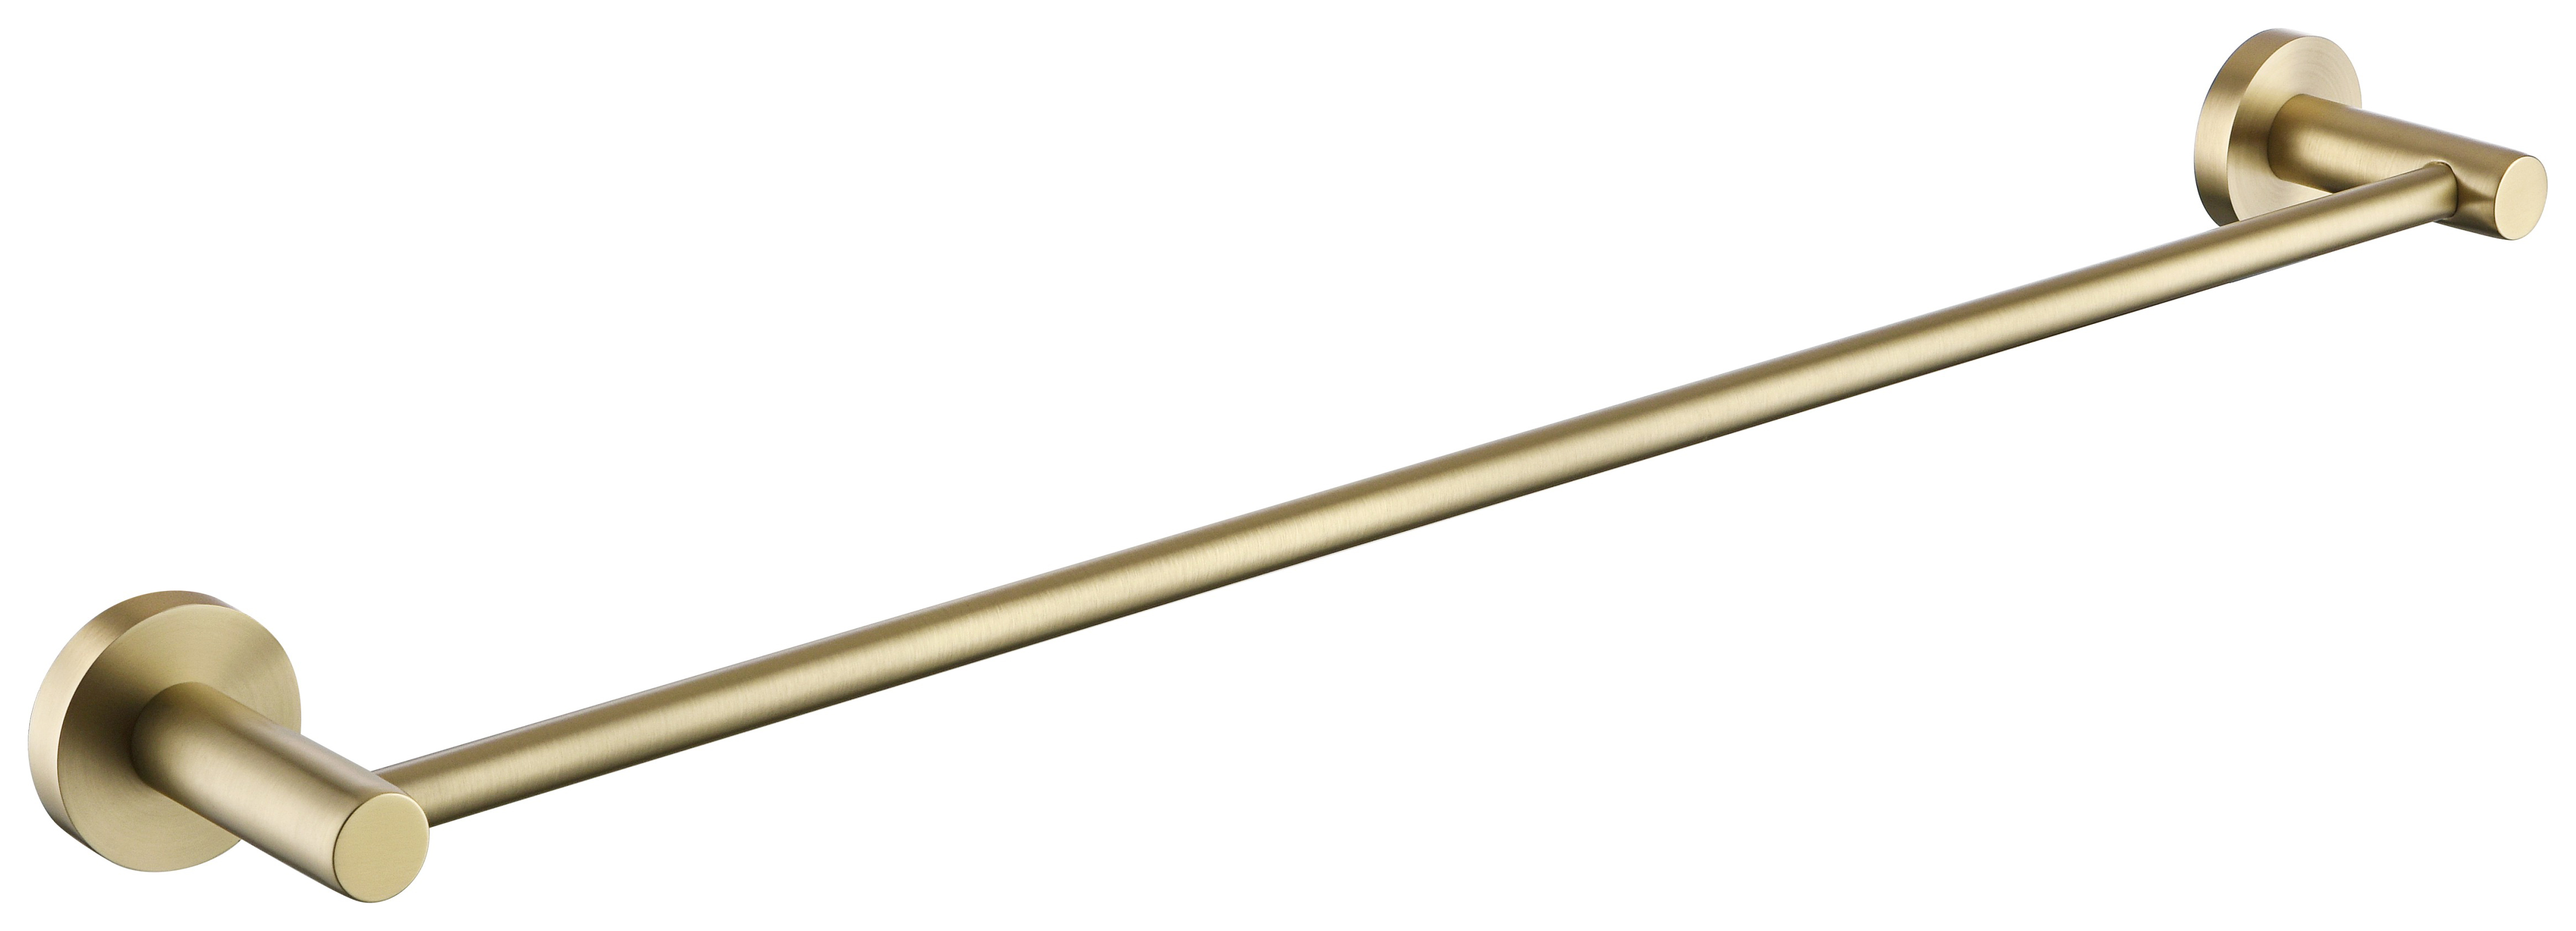 Bristan Round Towel Rail - Brushed Brass